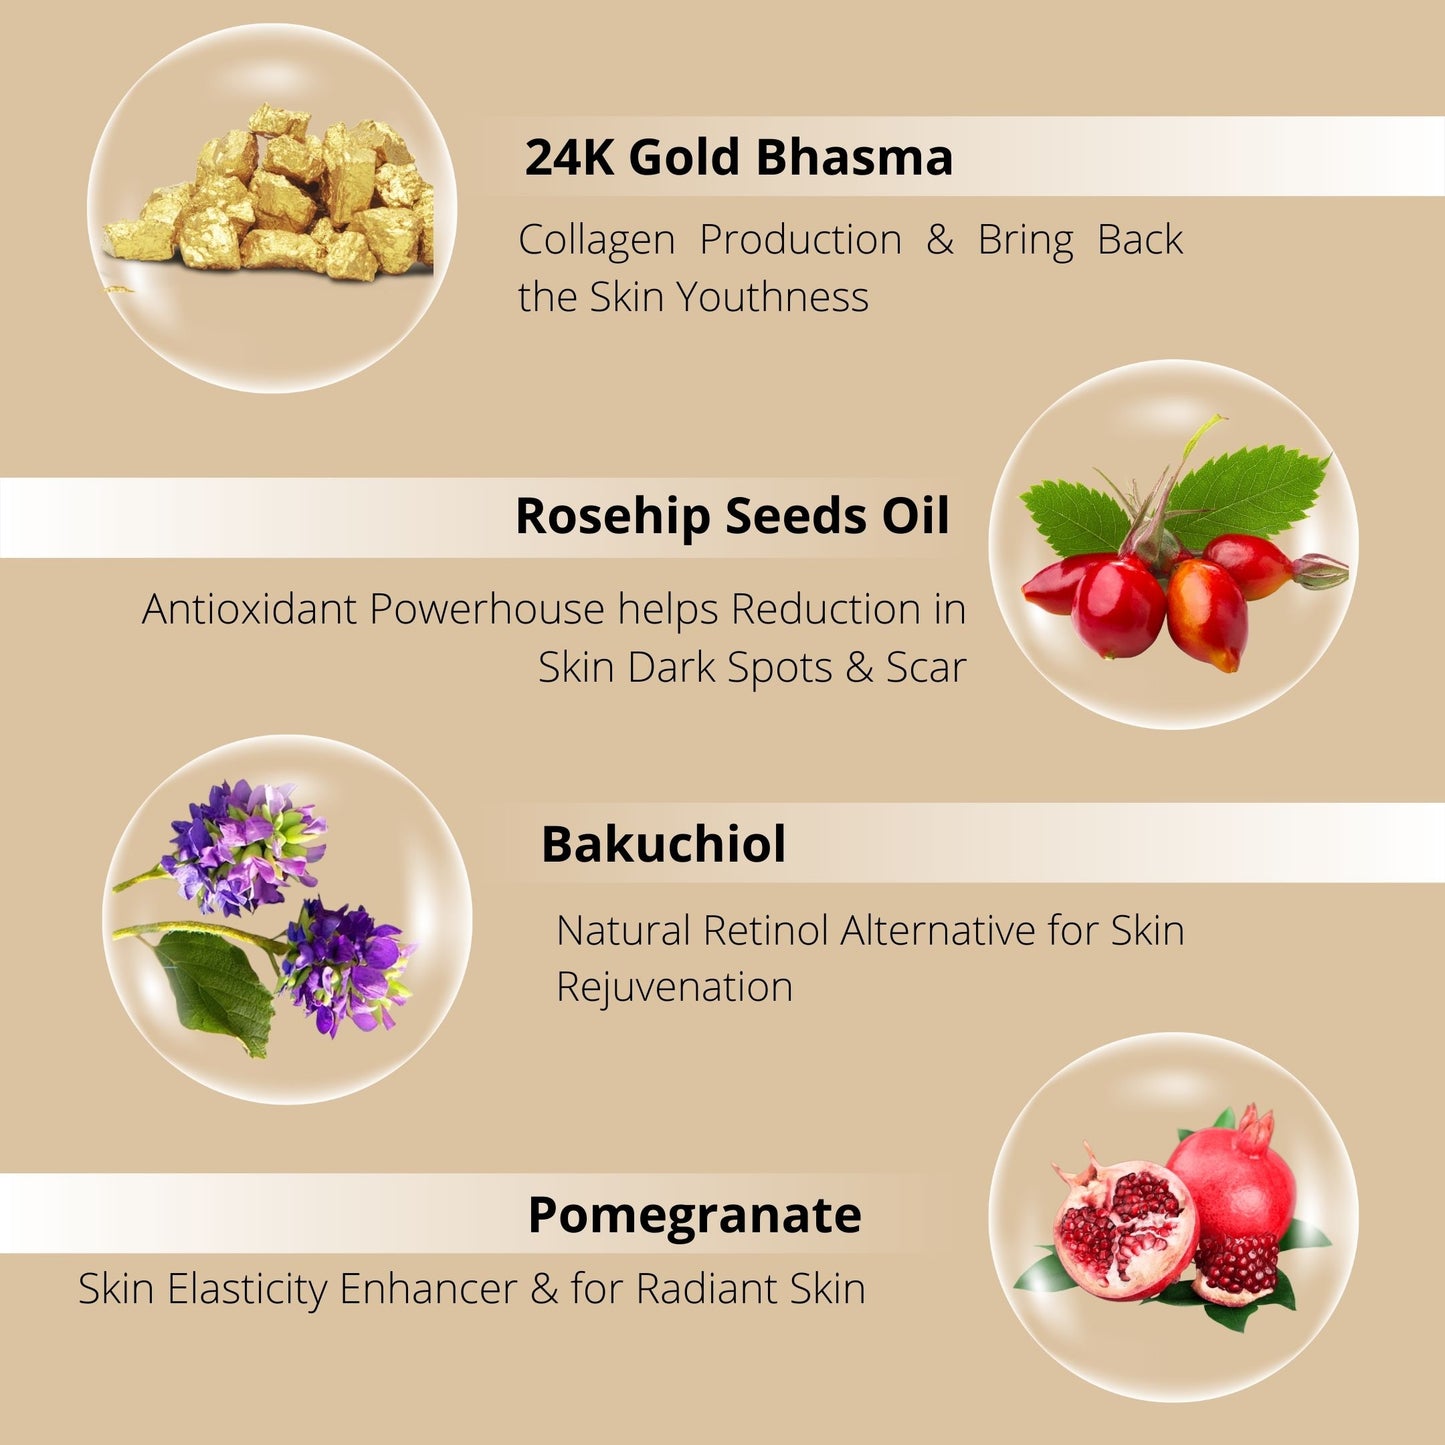 Biossential Soundarya Skin Brightening Face Radiance Elixir Serum with 24K Gold